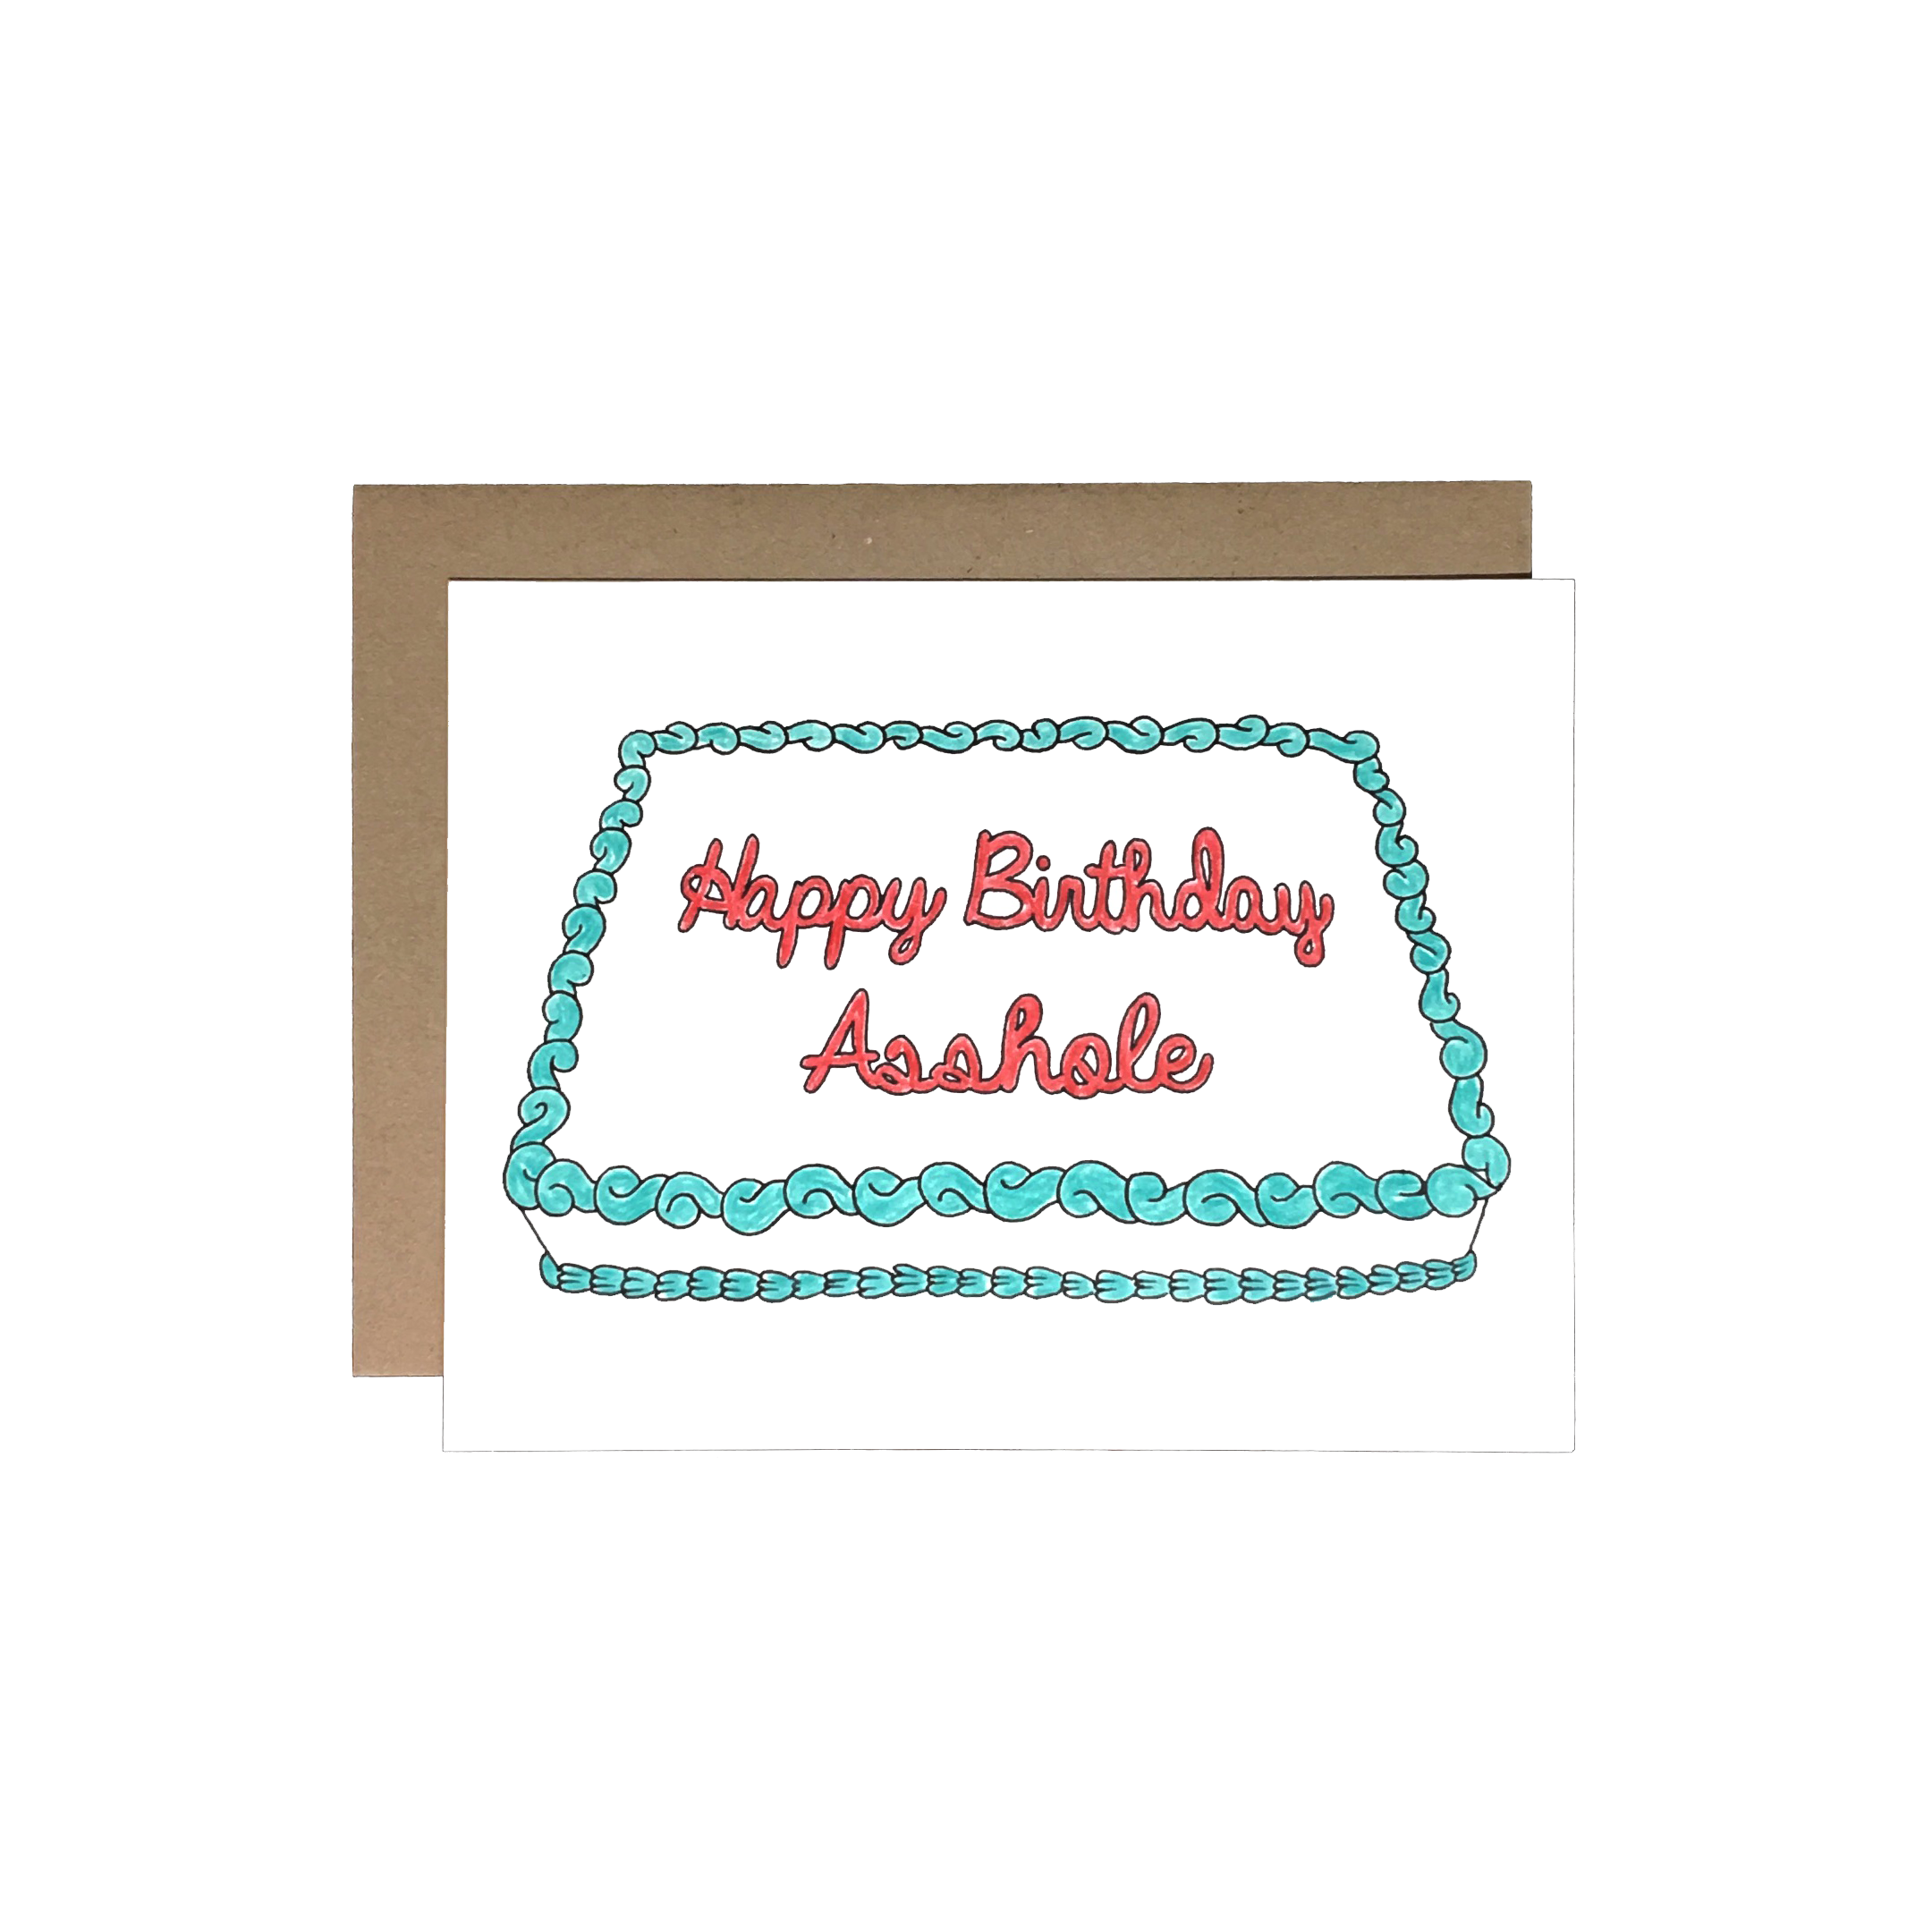 Birthday Asshole Cake Card - DIGS